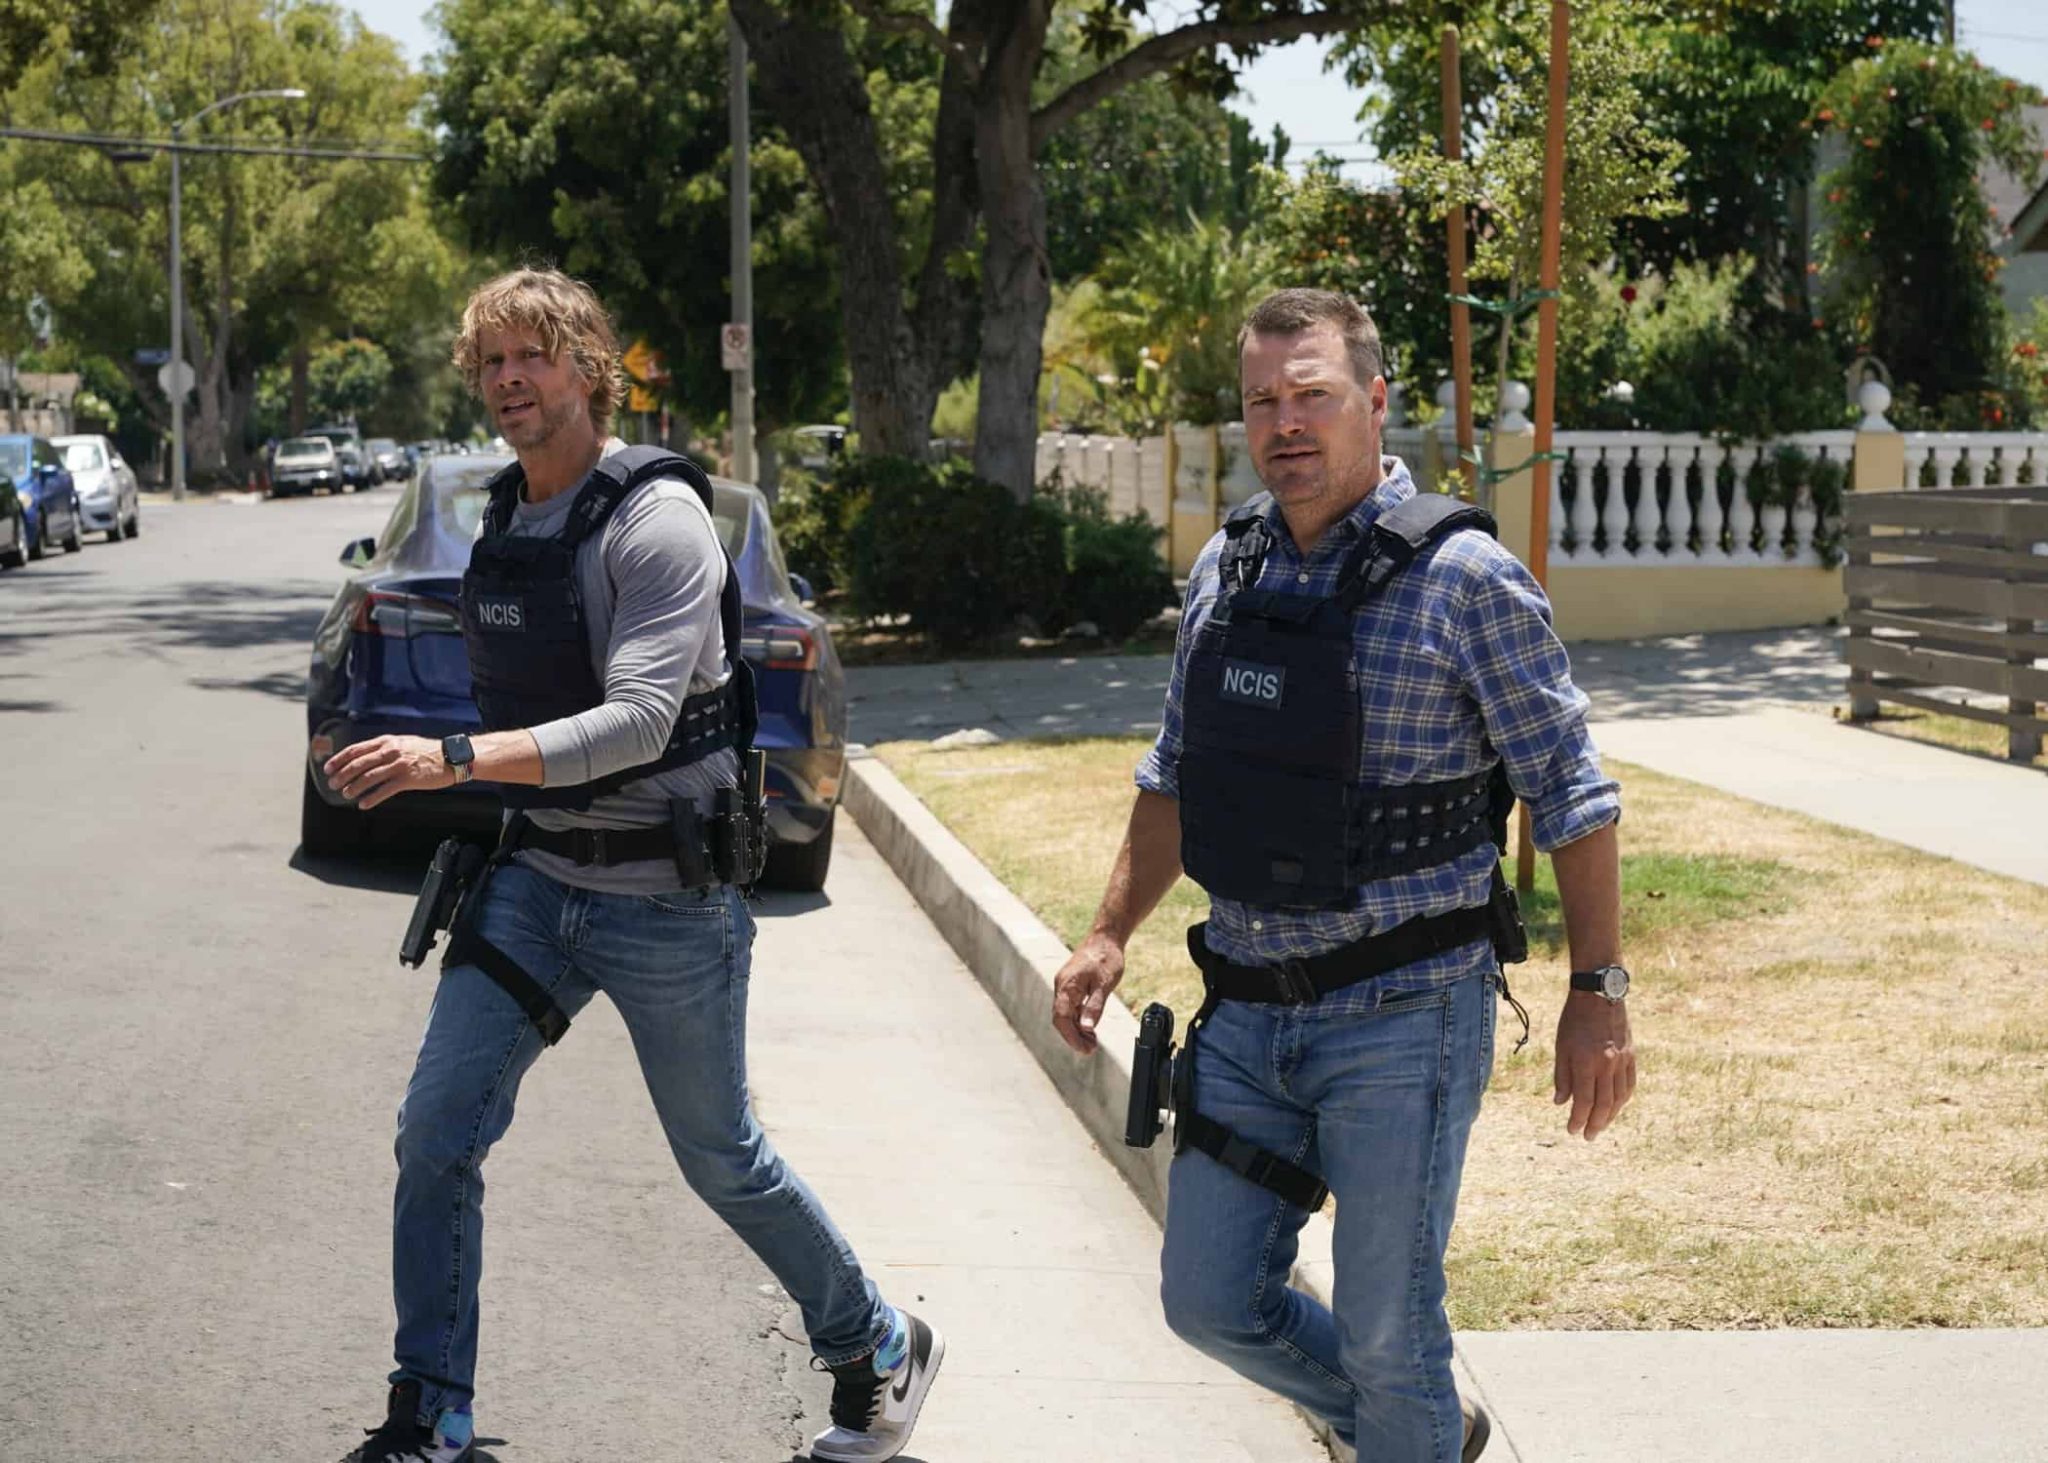 NCIS: Los Angeles Season 14 Episode 4 preview